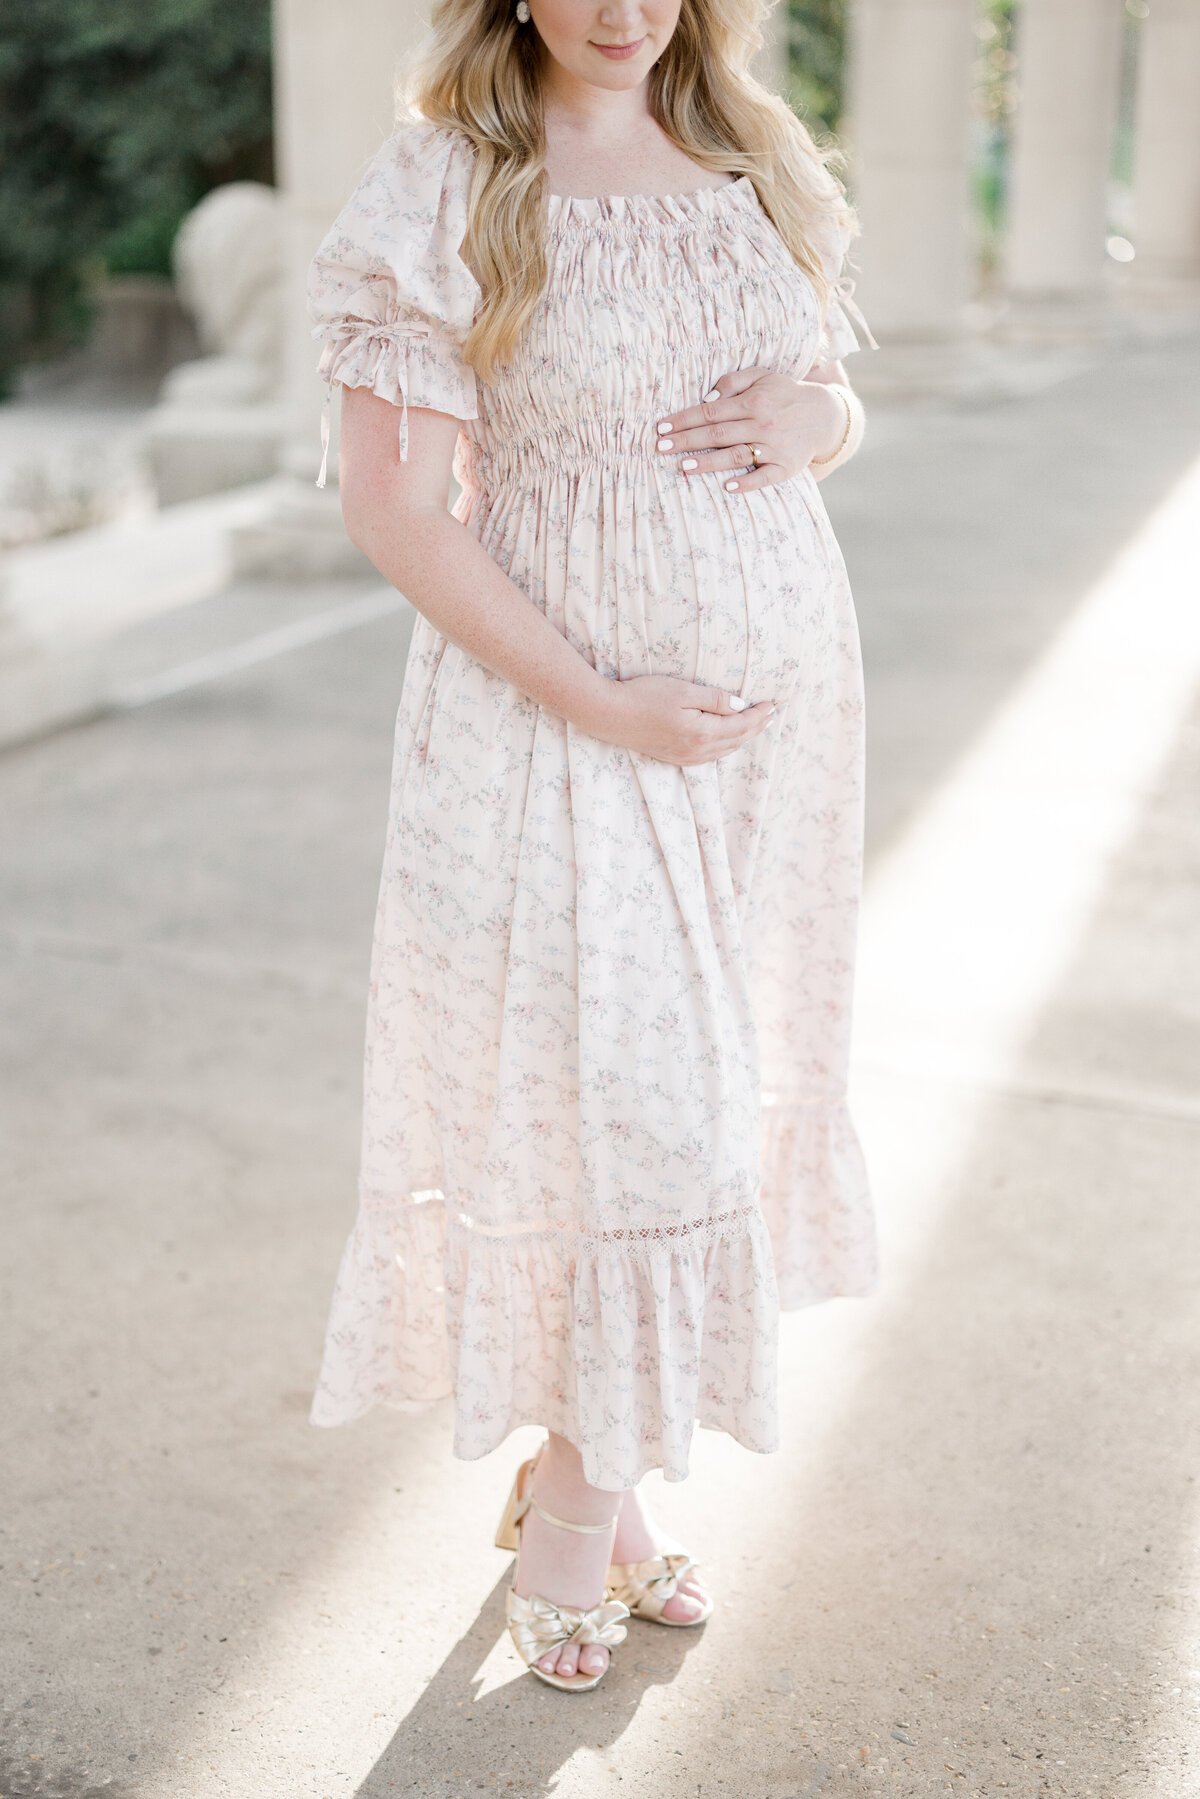 Jessie Newton Photography-Fennell Maternity-City Park-New Orleans, LA-92